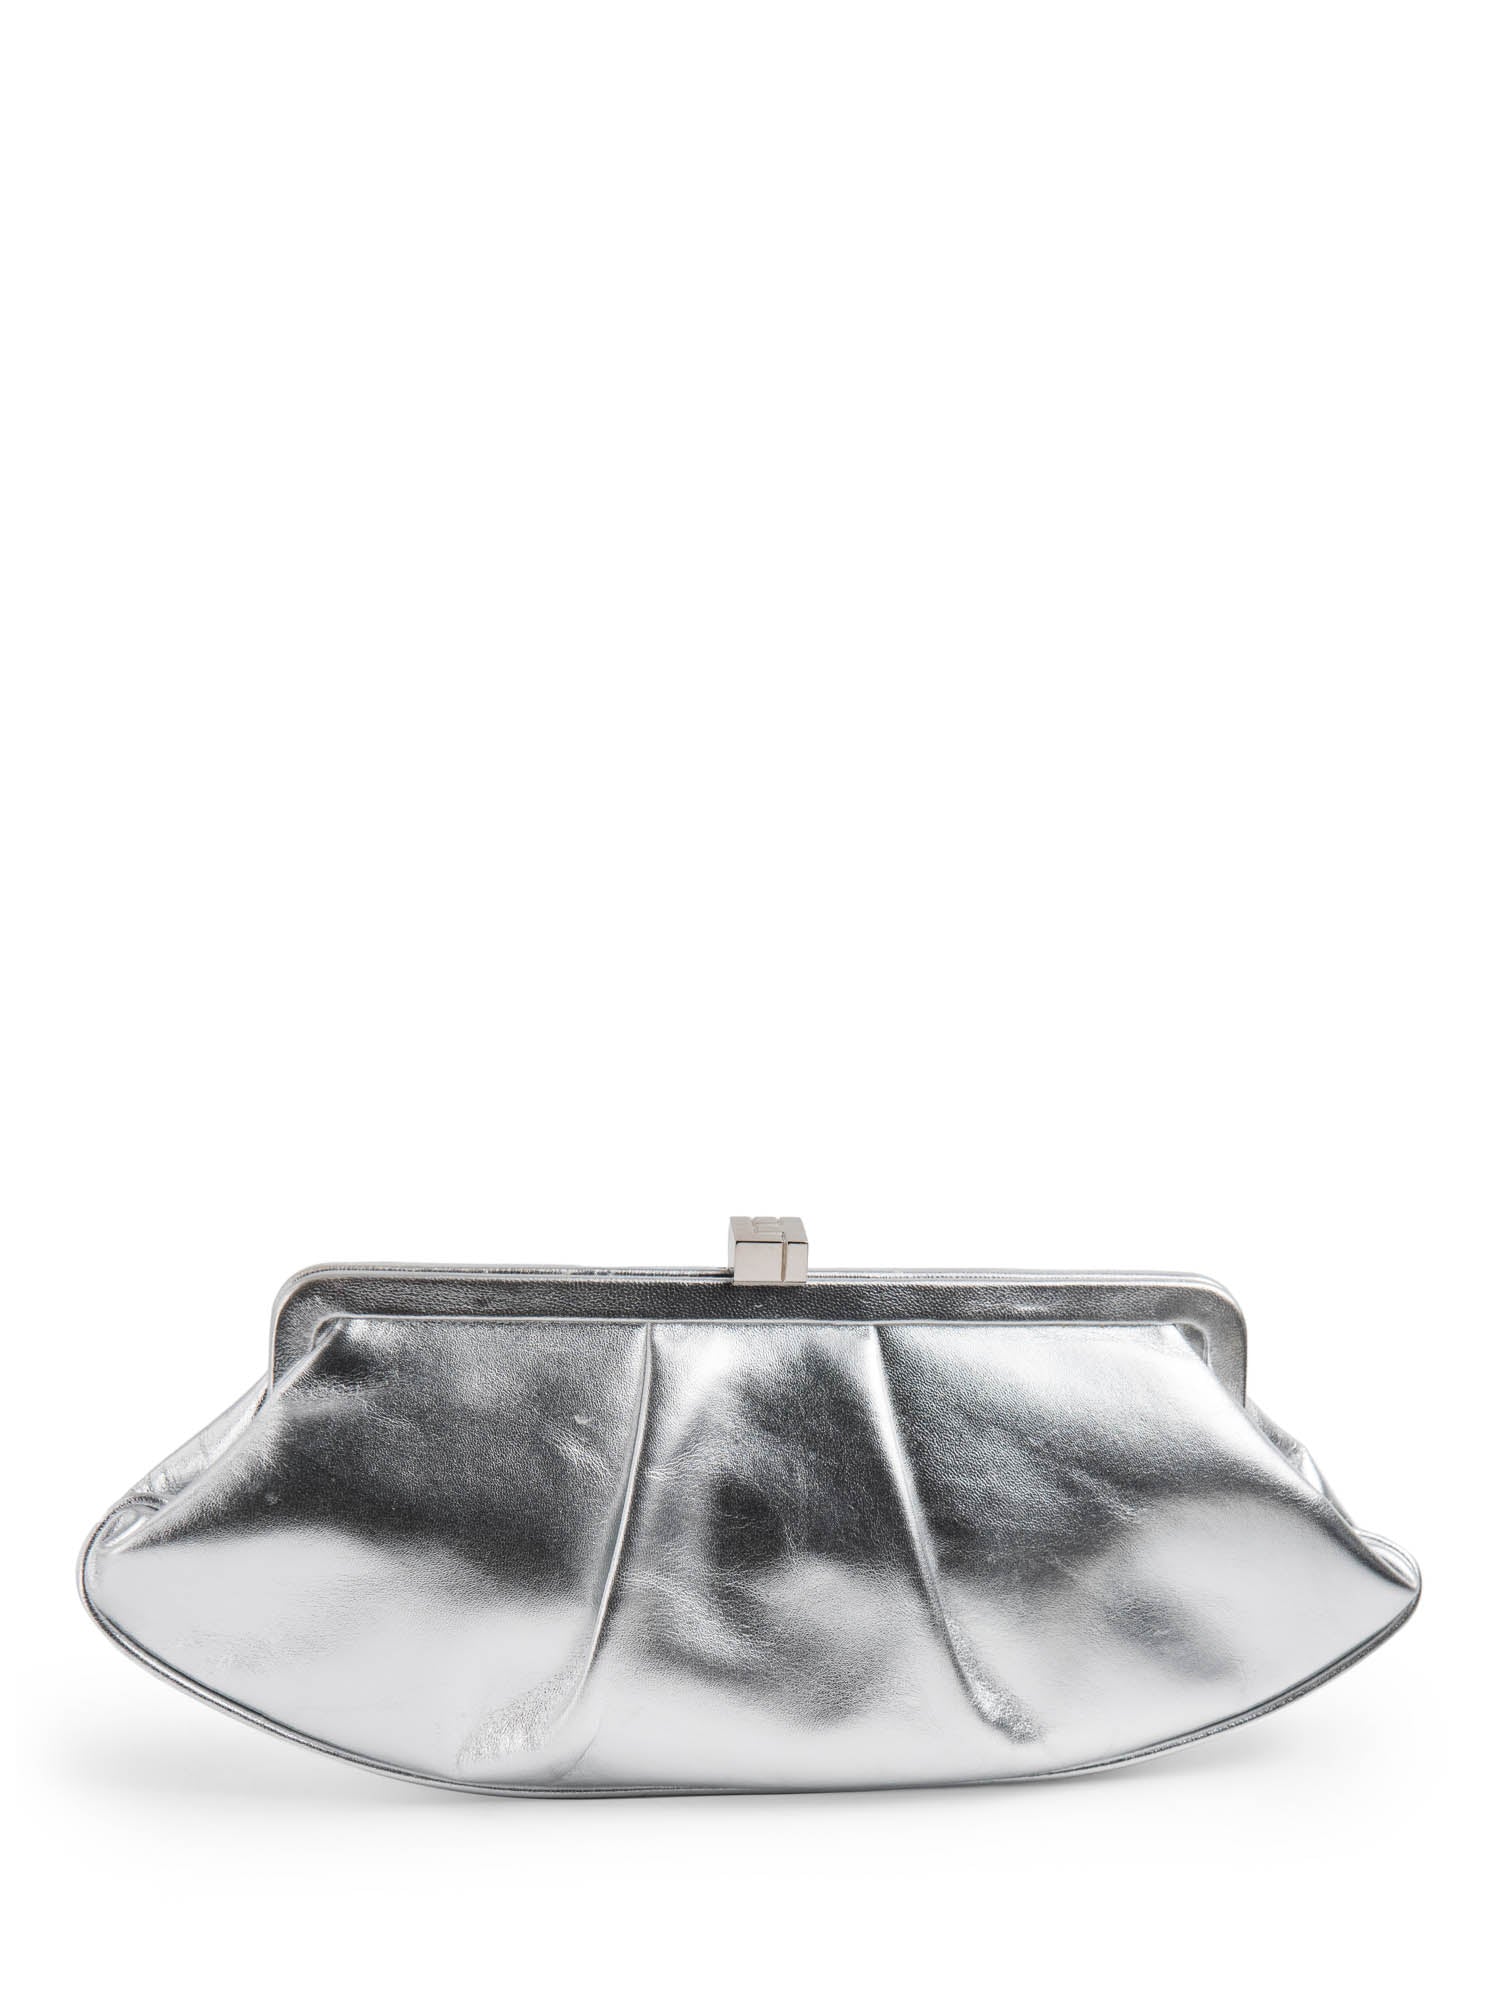 Lambertson Truex LT Logo Clasp Clutch Bag Silver-designer resale